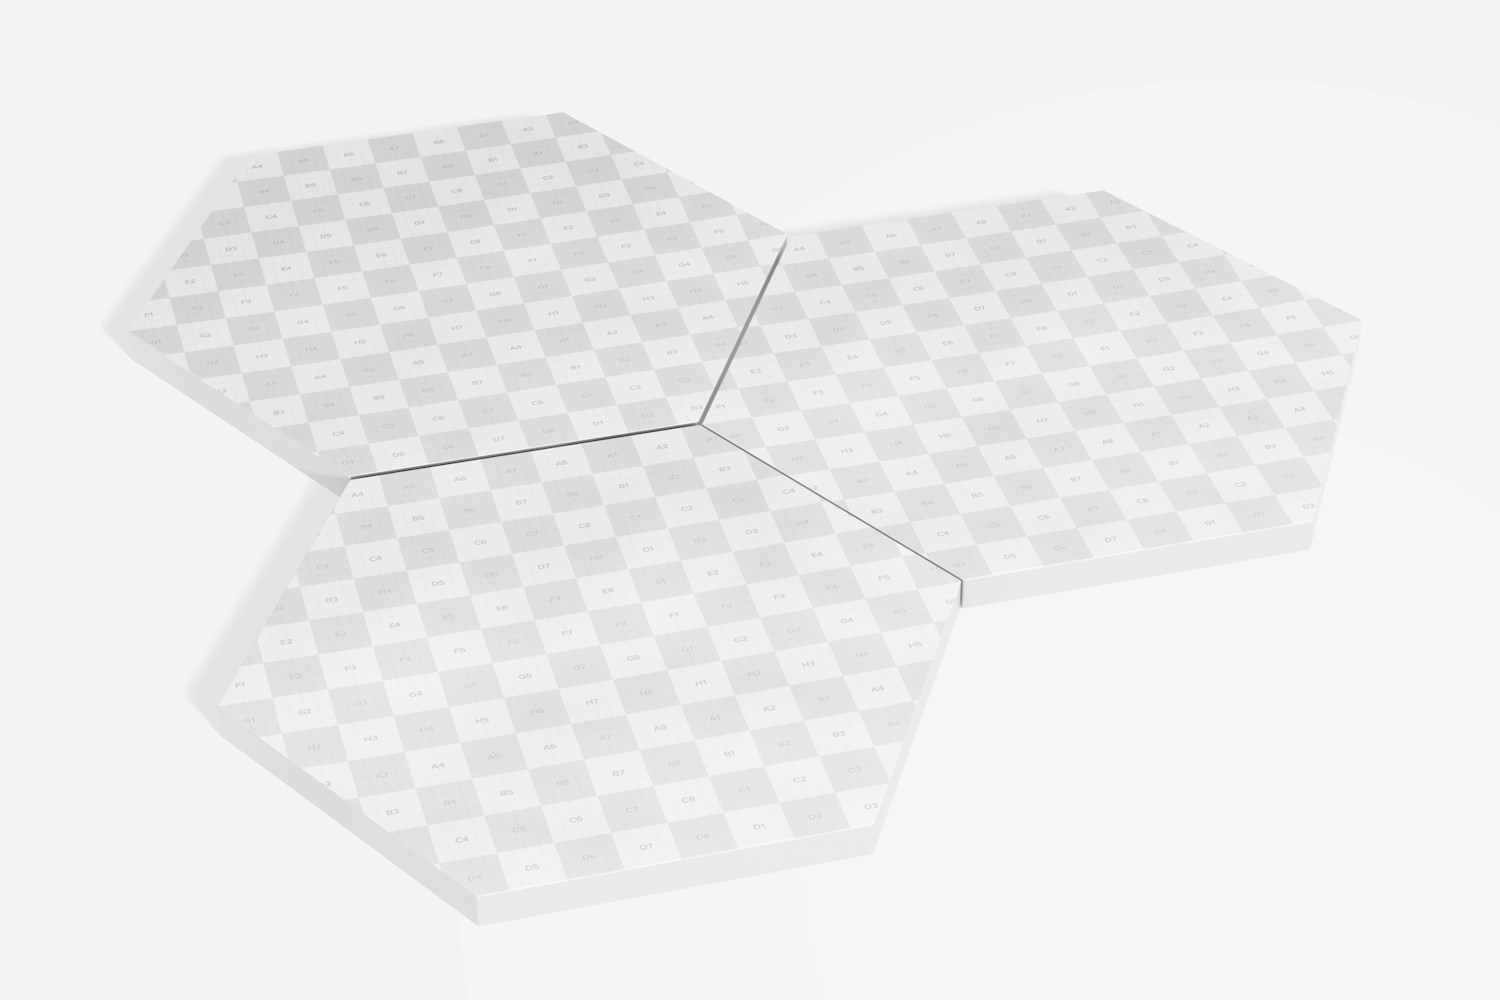 Hexagonal Ceramic Tile Mockup, Right View